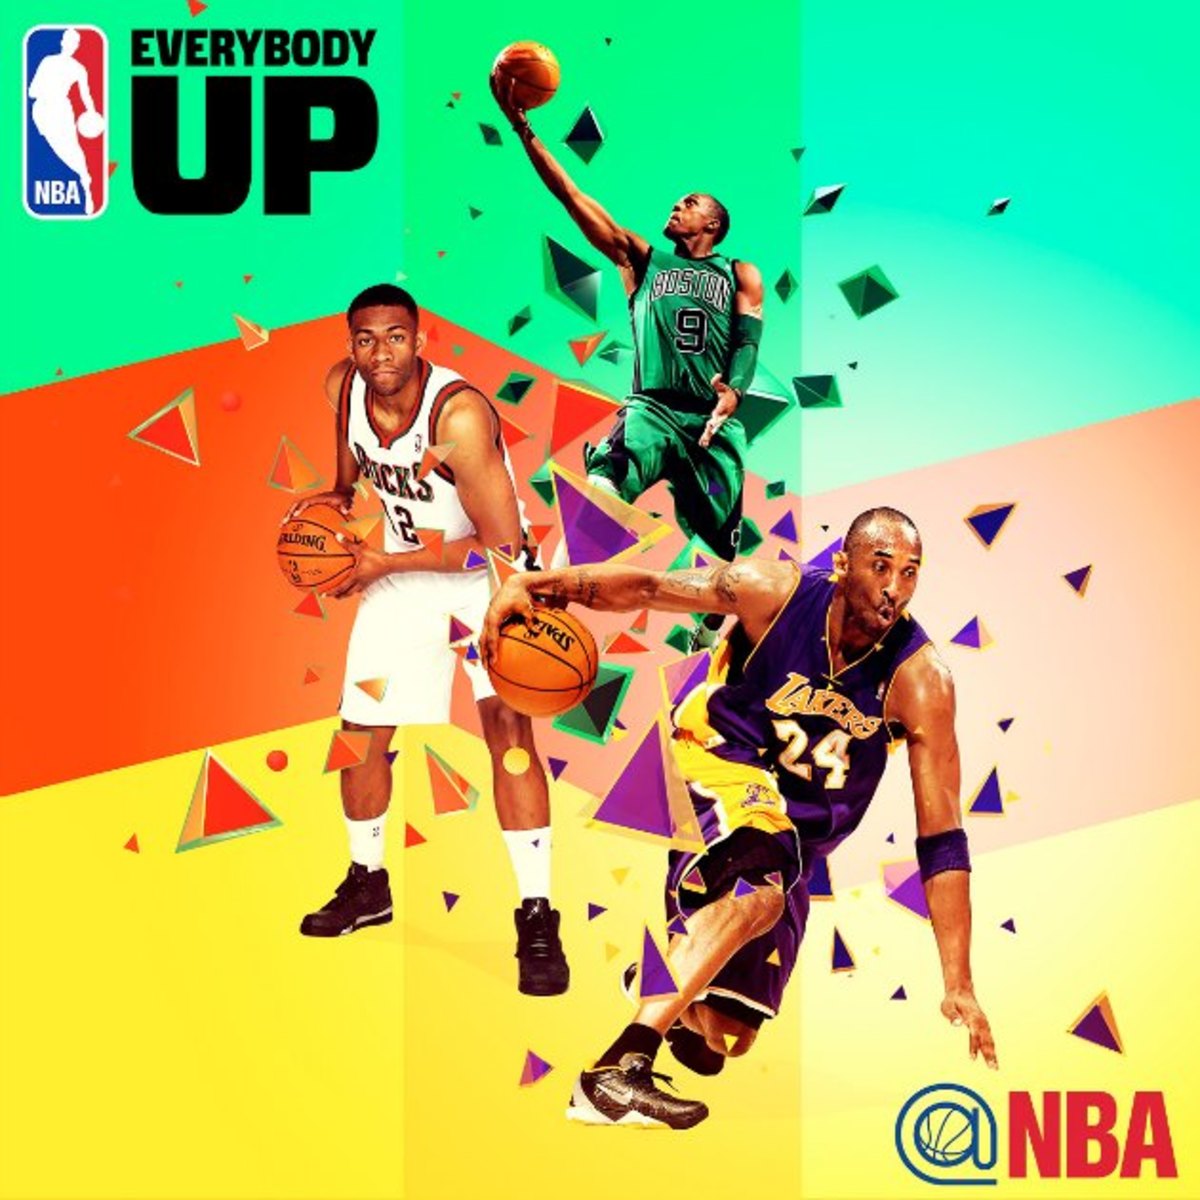 NBA-season-tip-off-Everybody-up-3.jpg